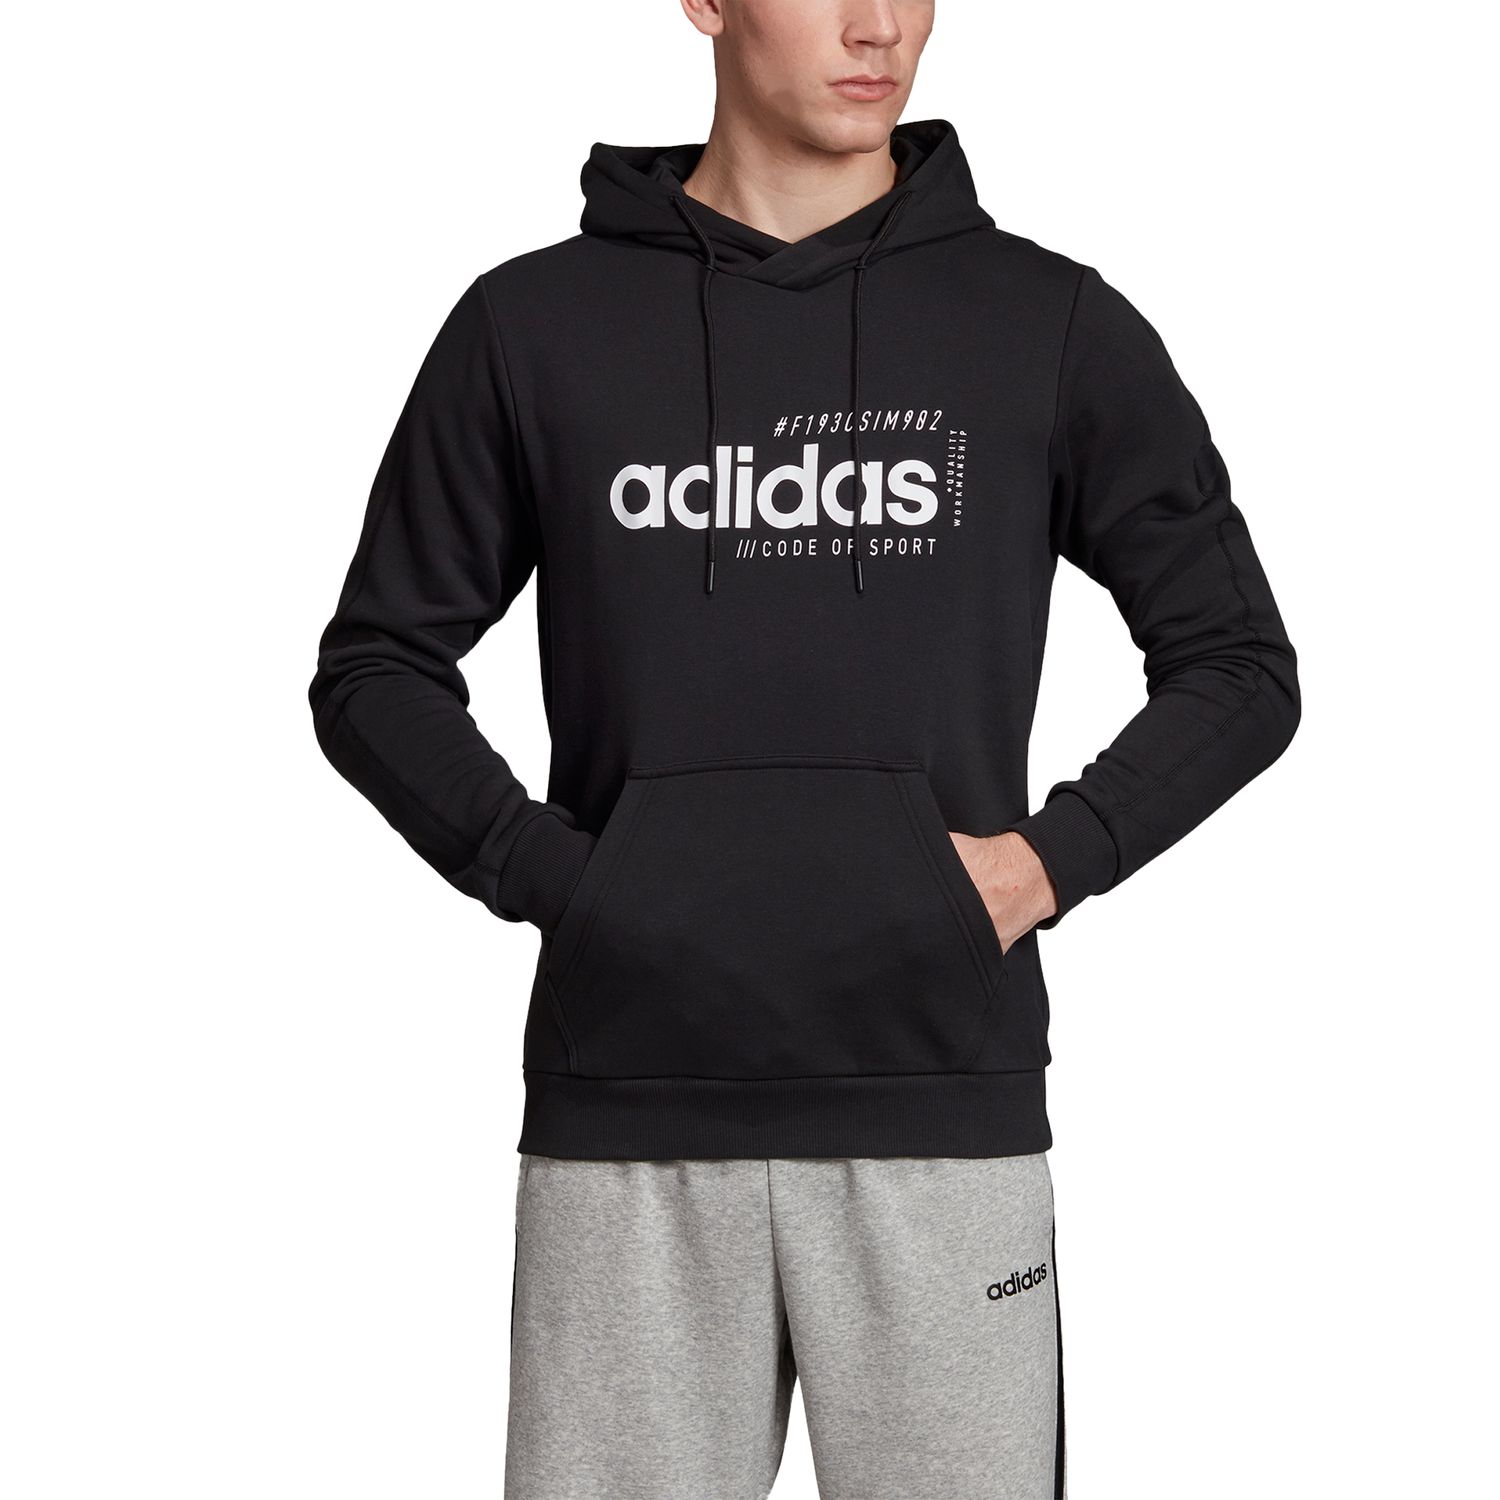 men's adidas hoodies on sale